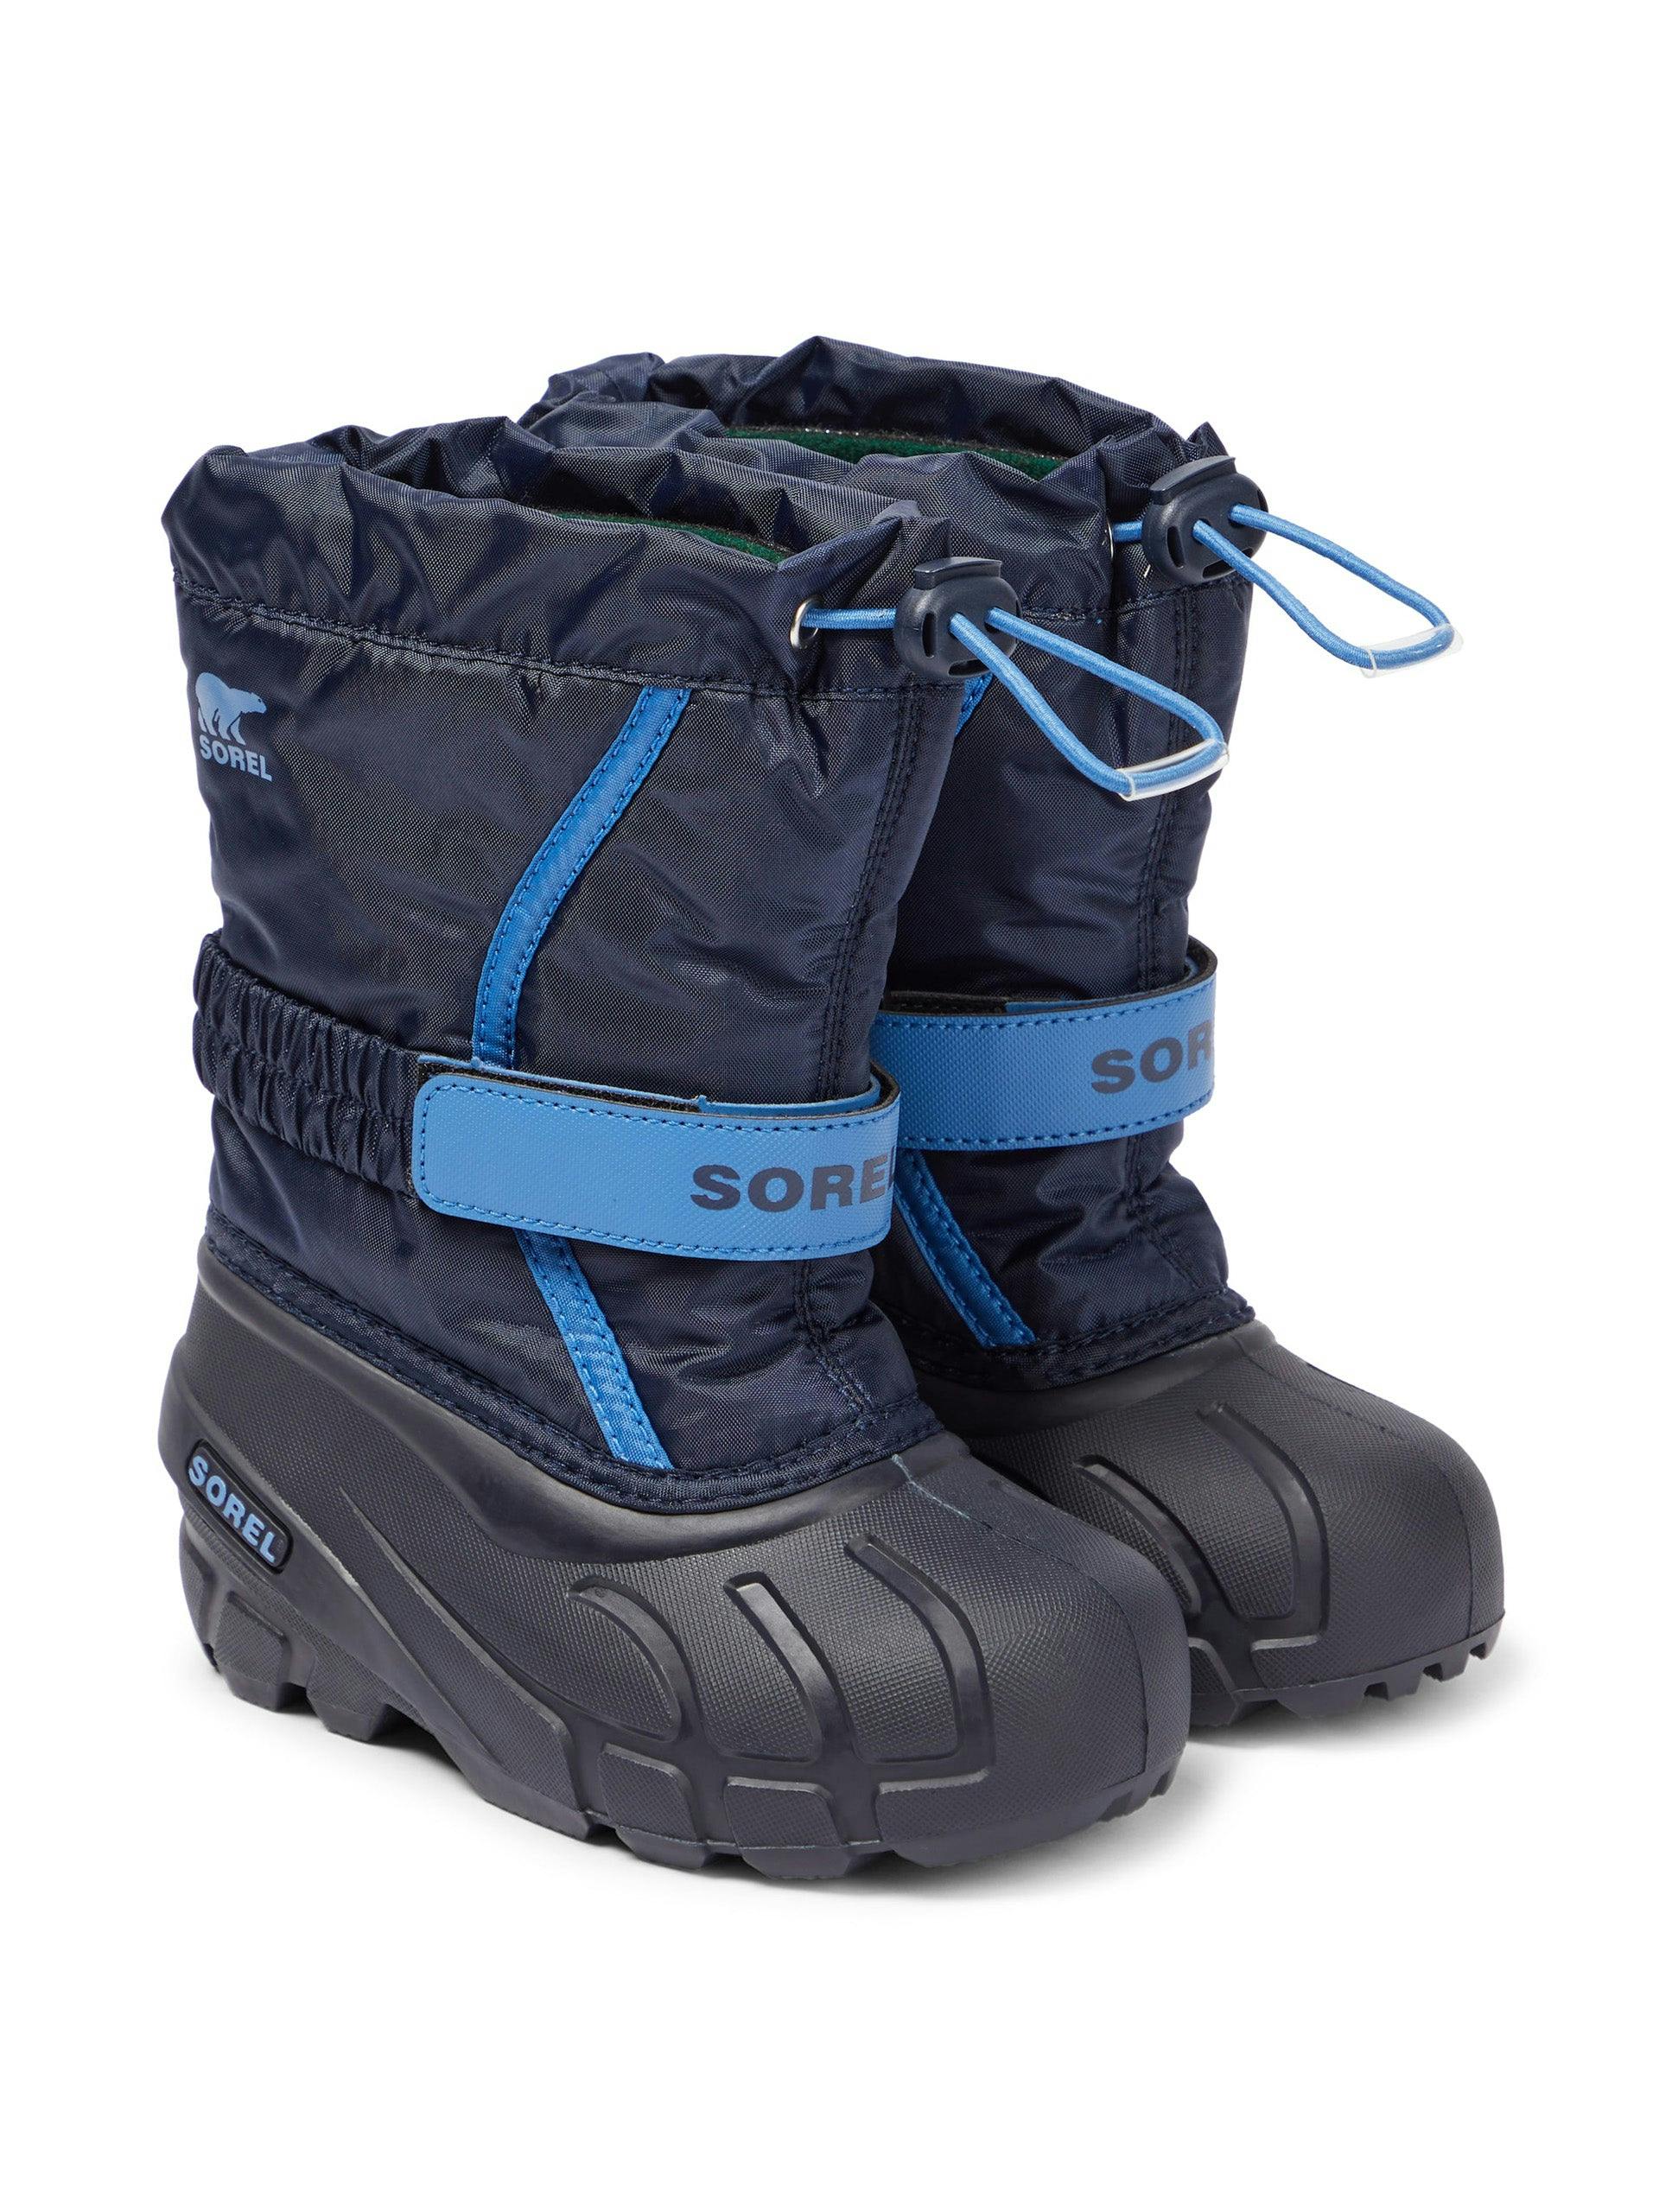 Flurry snow boots